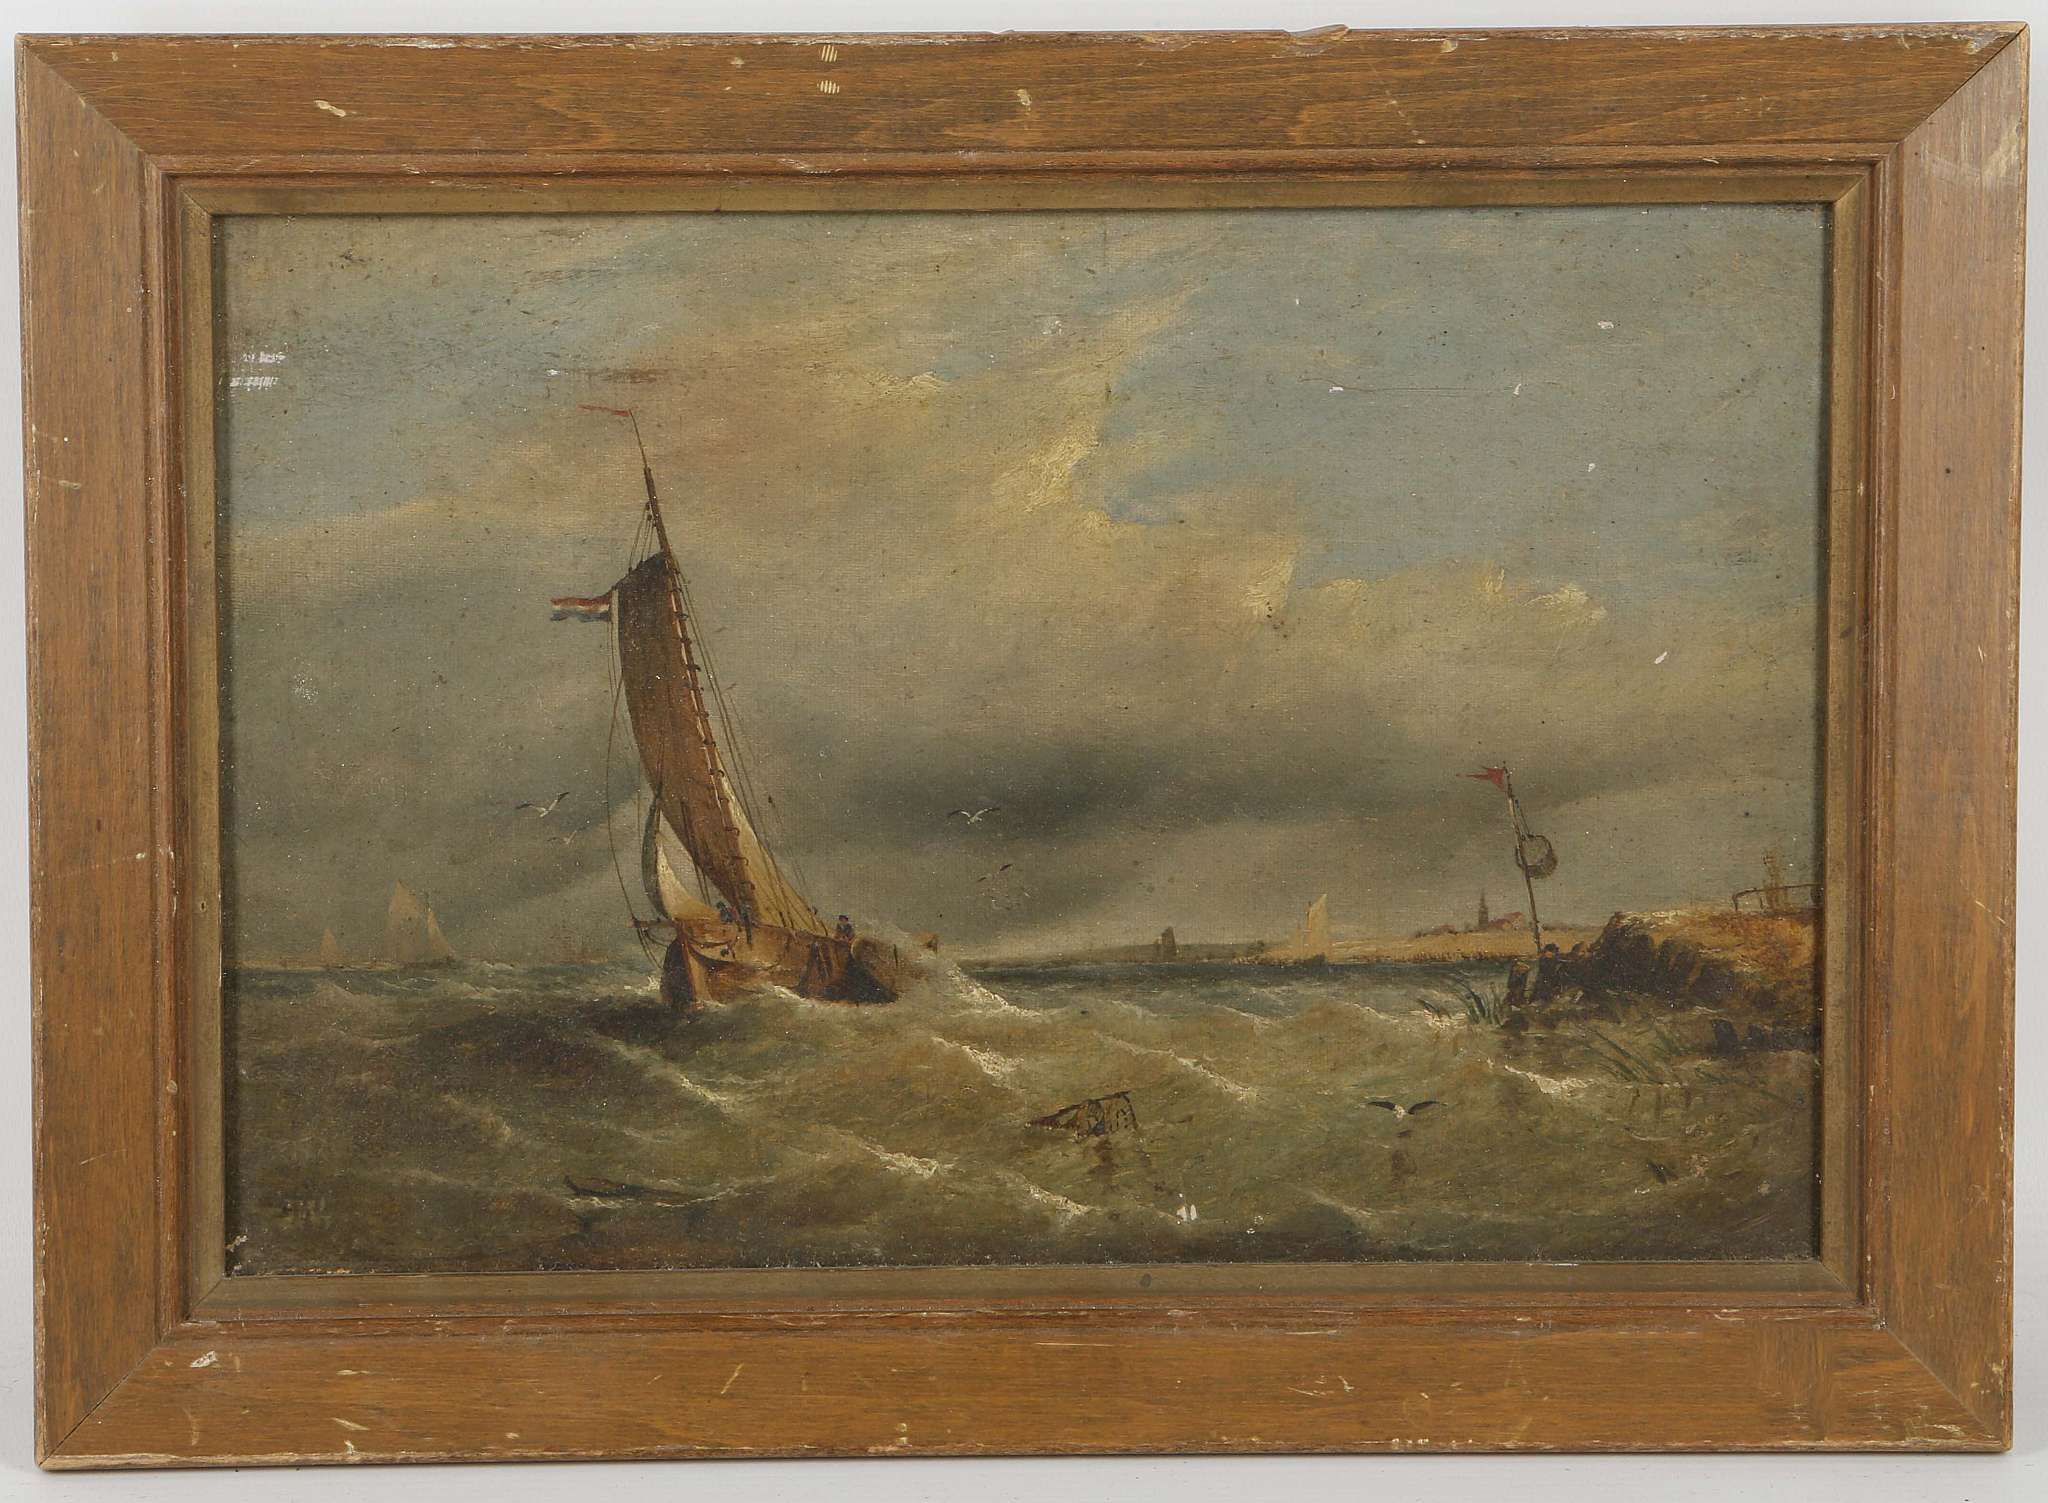 C.1840, English School, oil on canvas, marine study, 'Fishing Boats off the Coast', framed, 20 x